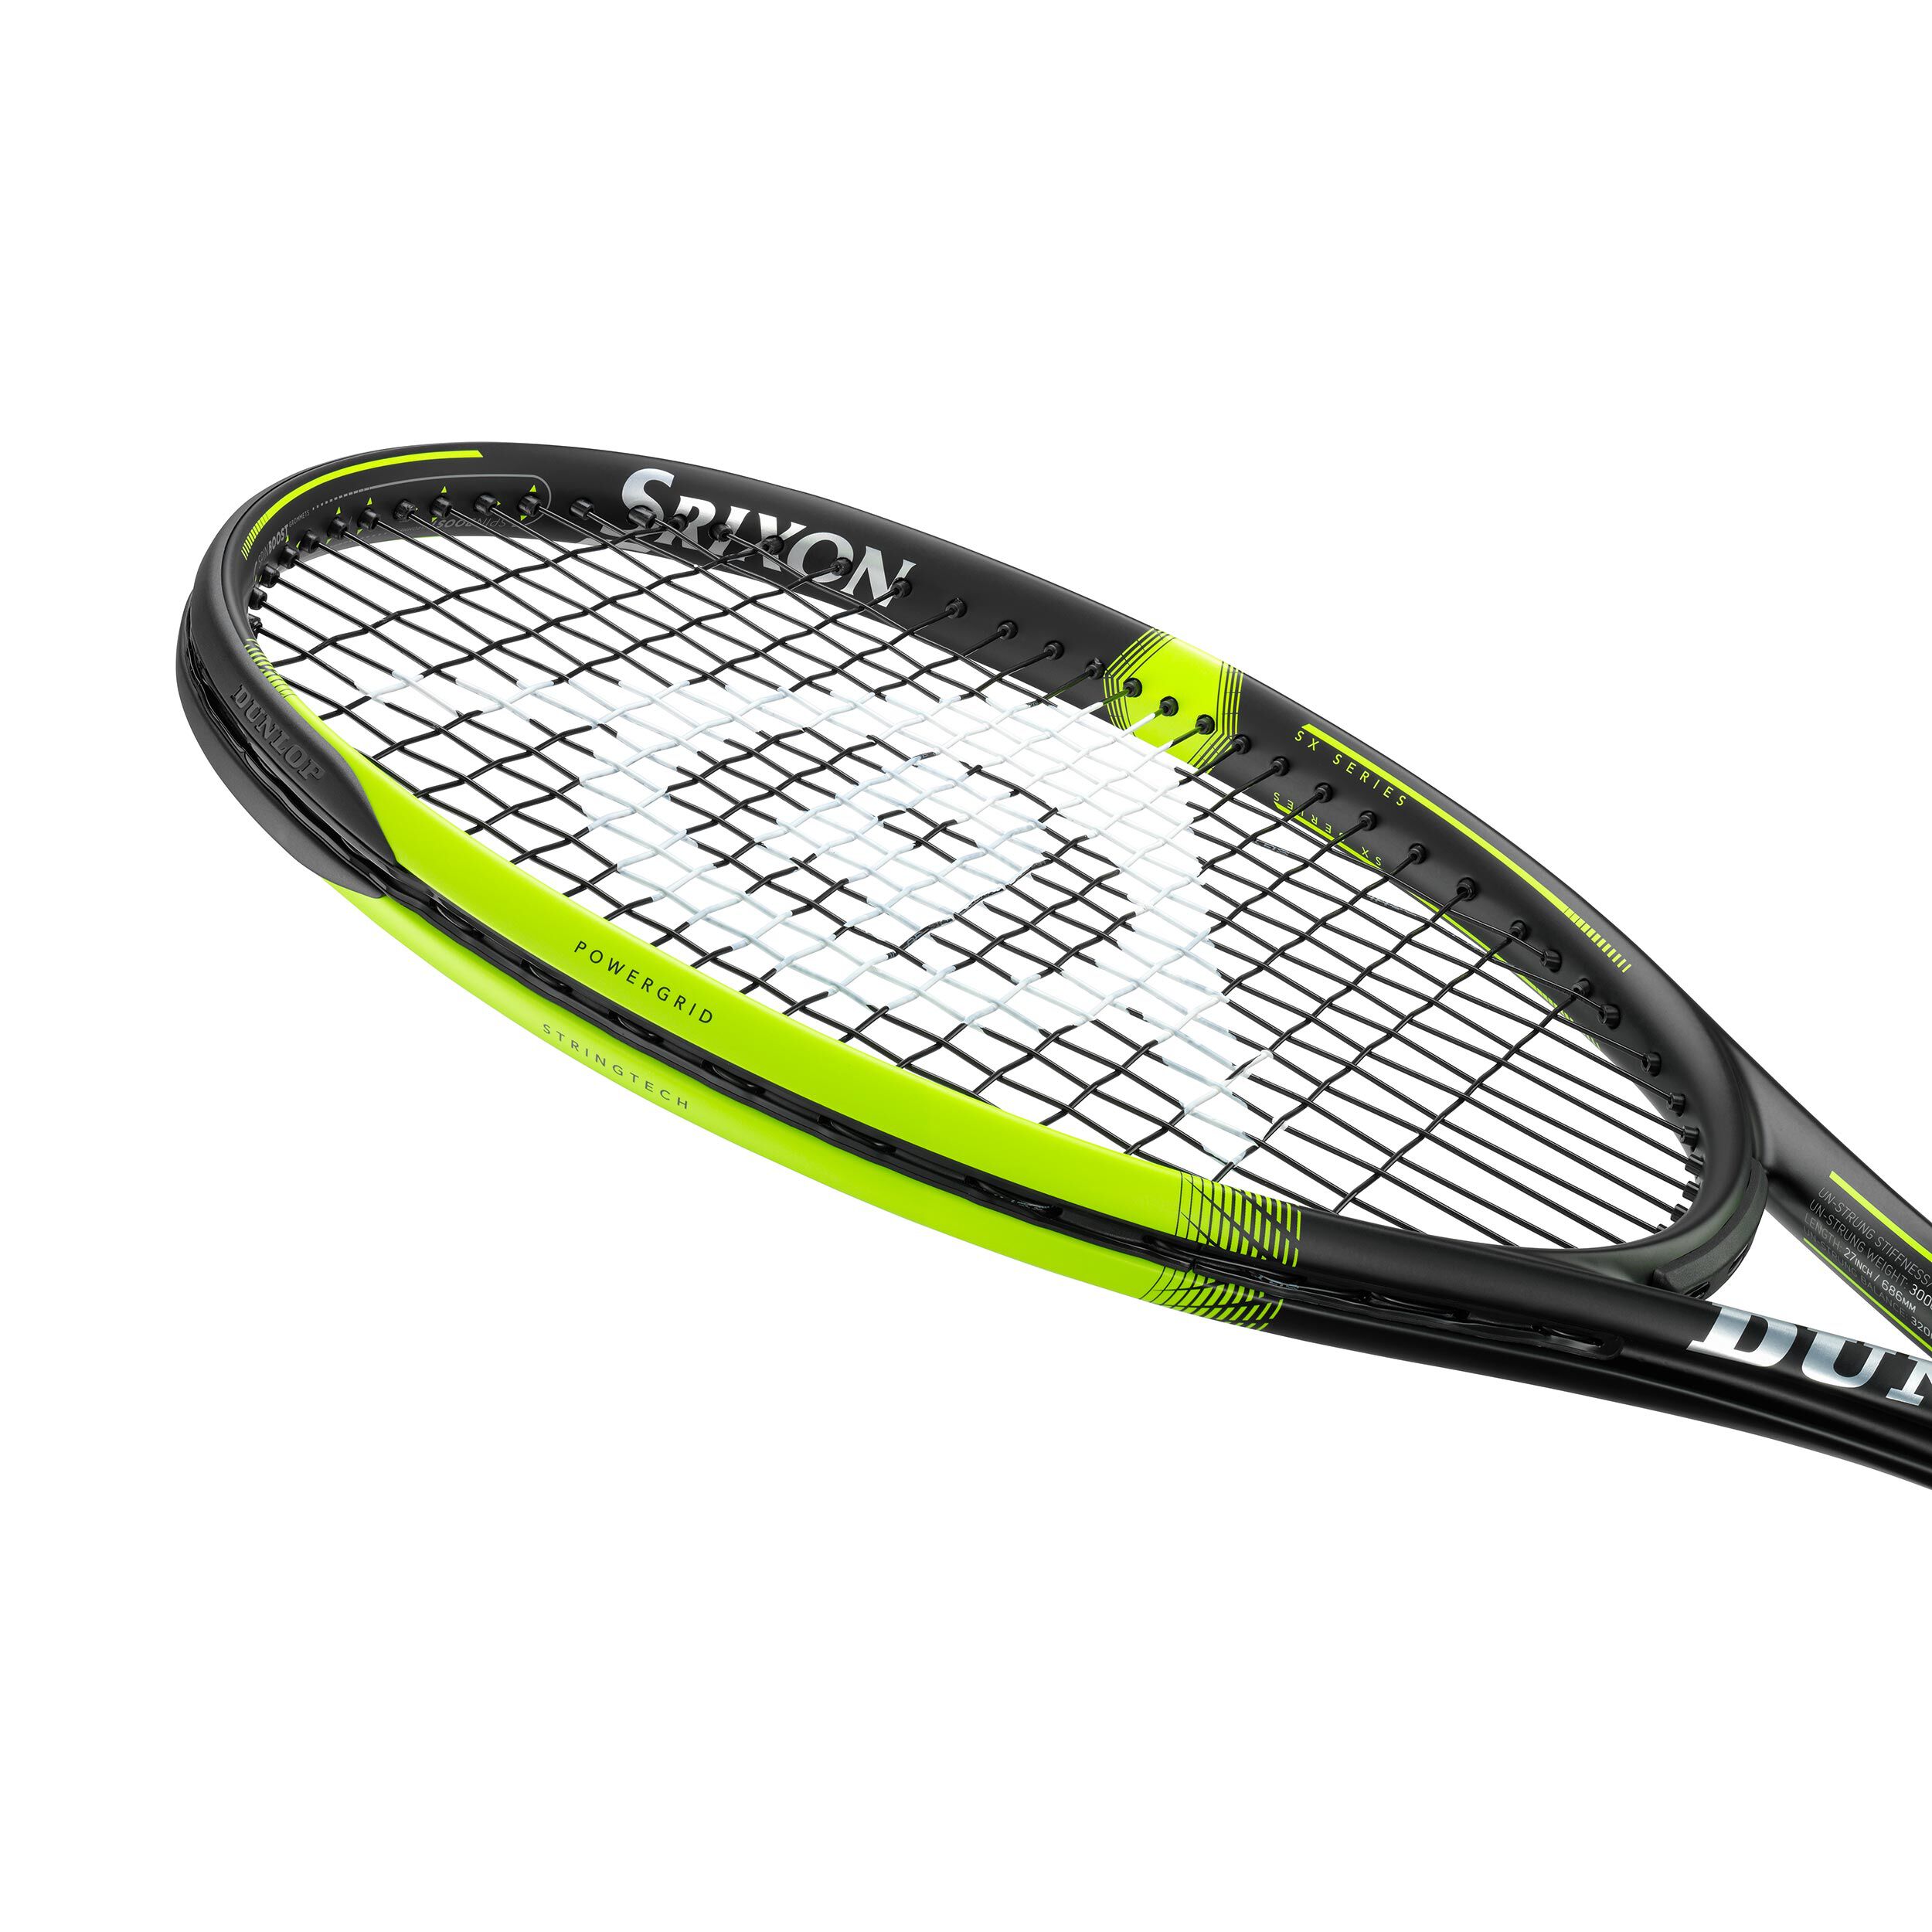 Details about   Dunlop 2020 SX 300 100 Tennis Racquet Racket Black Lime 100sq 300g 16x19 